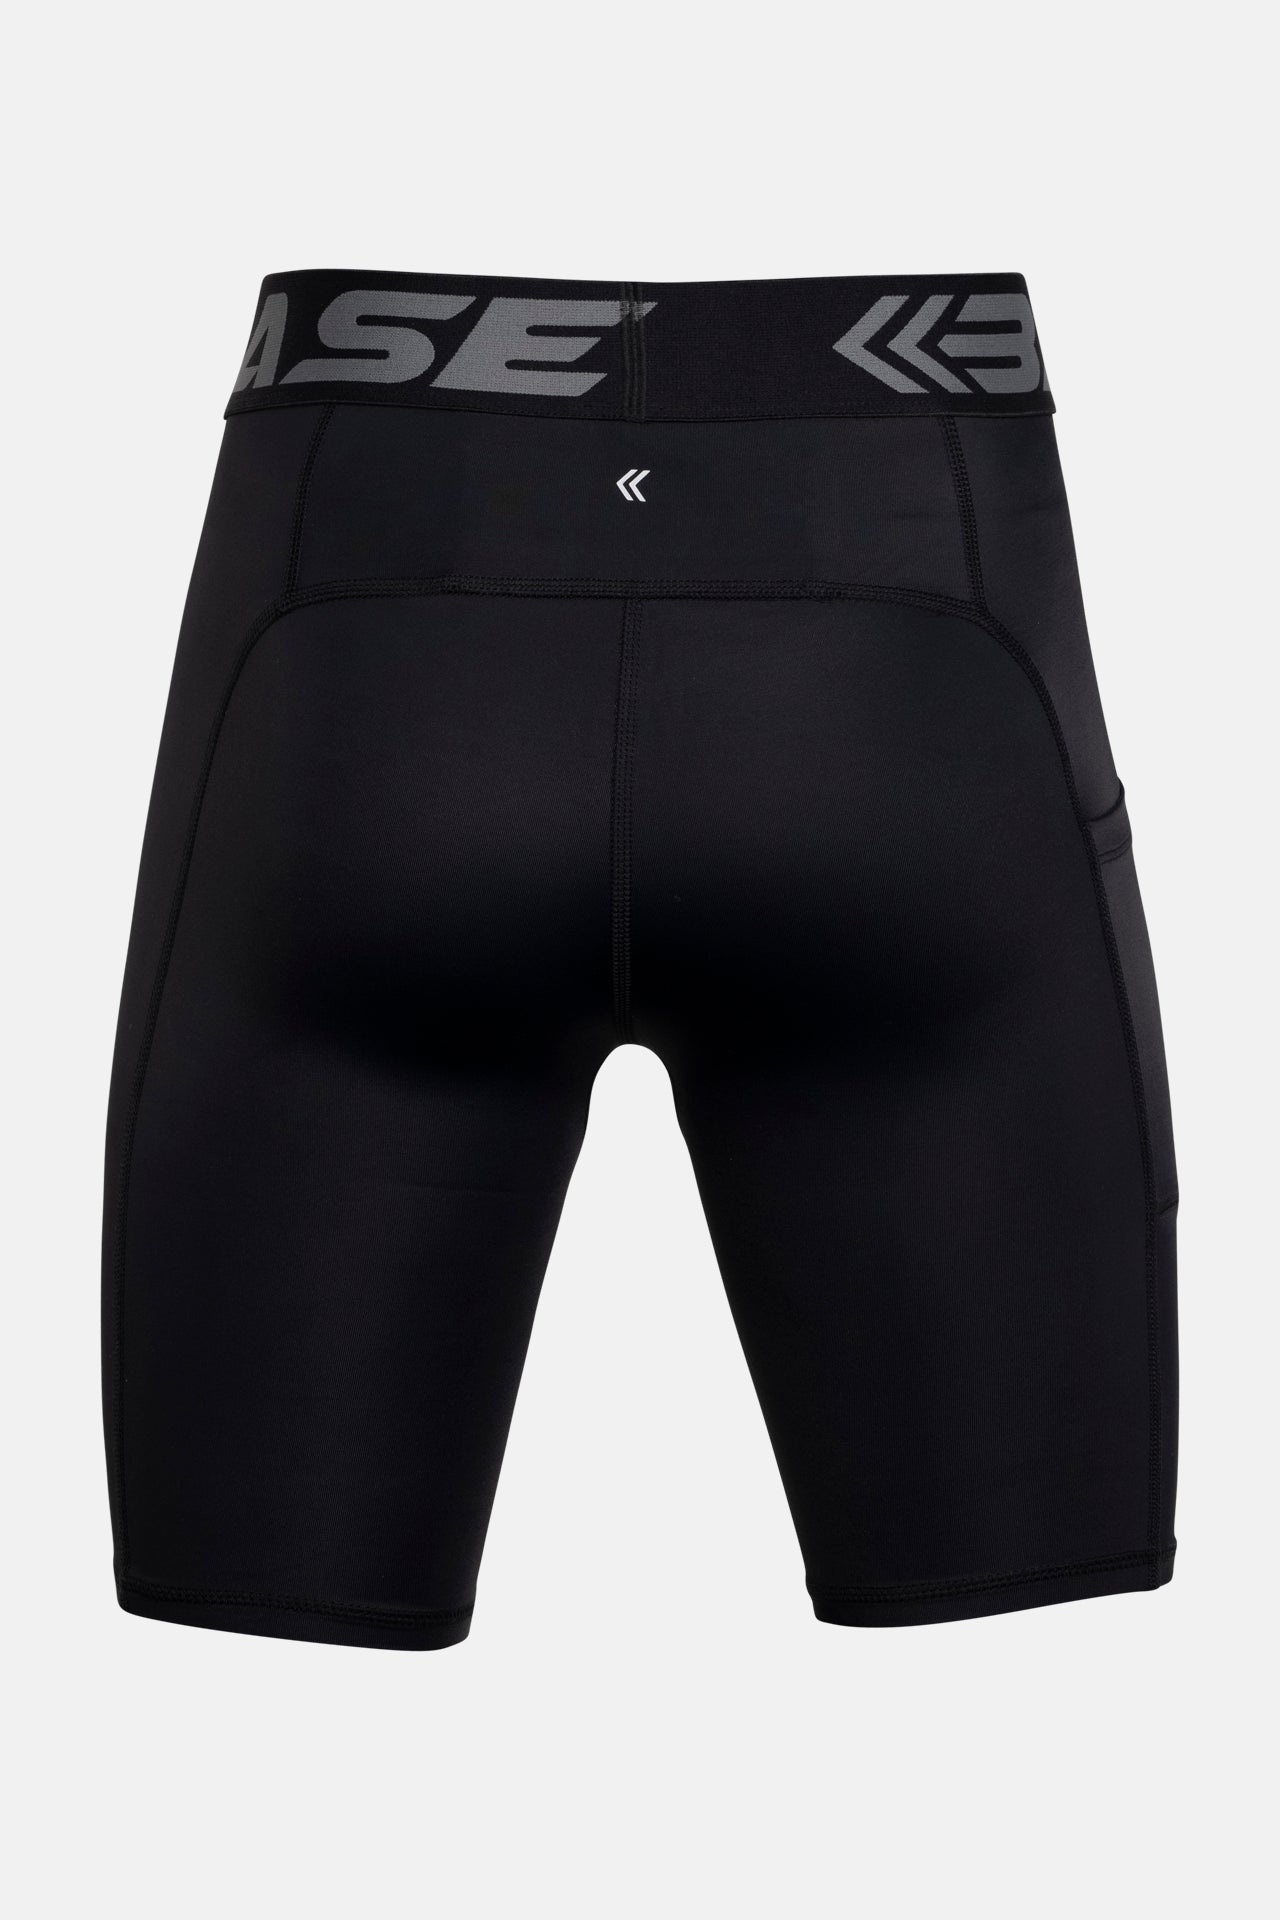 BASE Women's Compression Shorts - Black